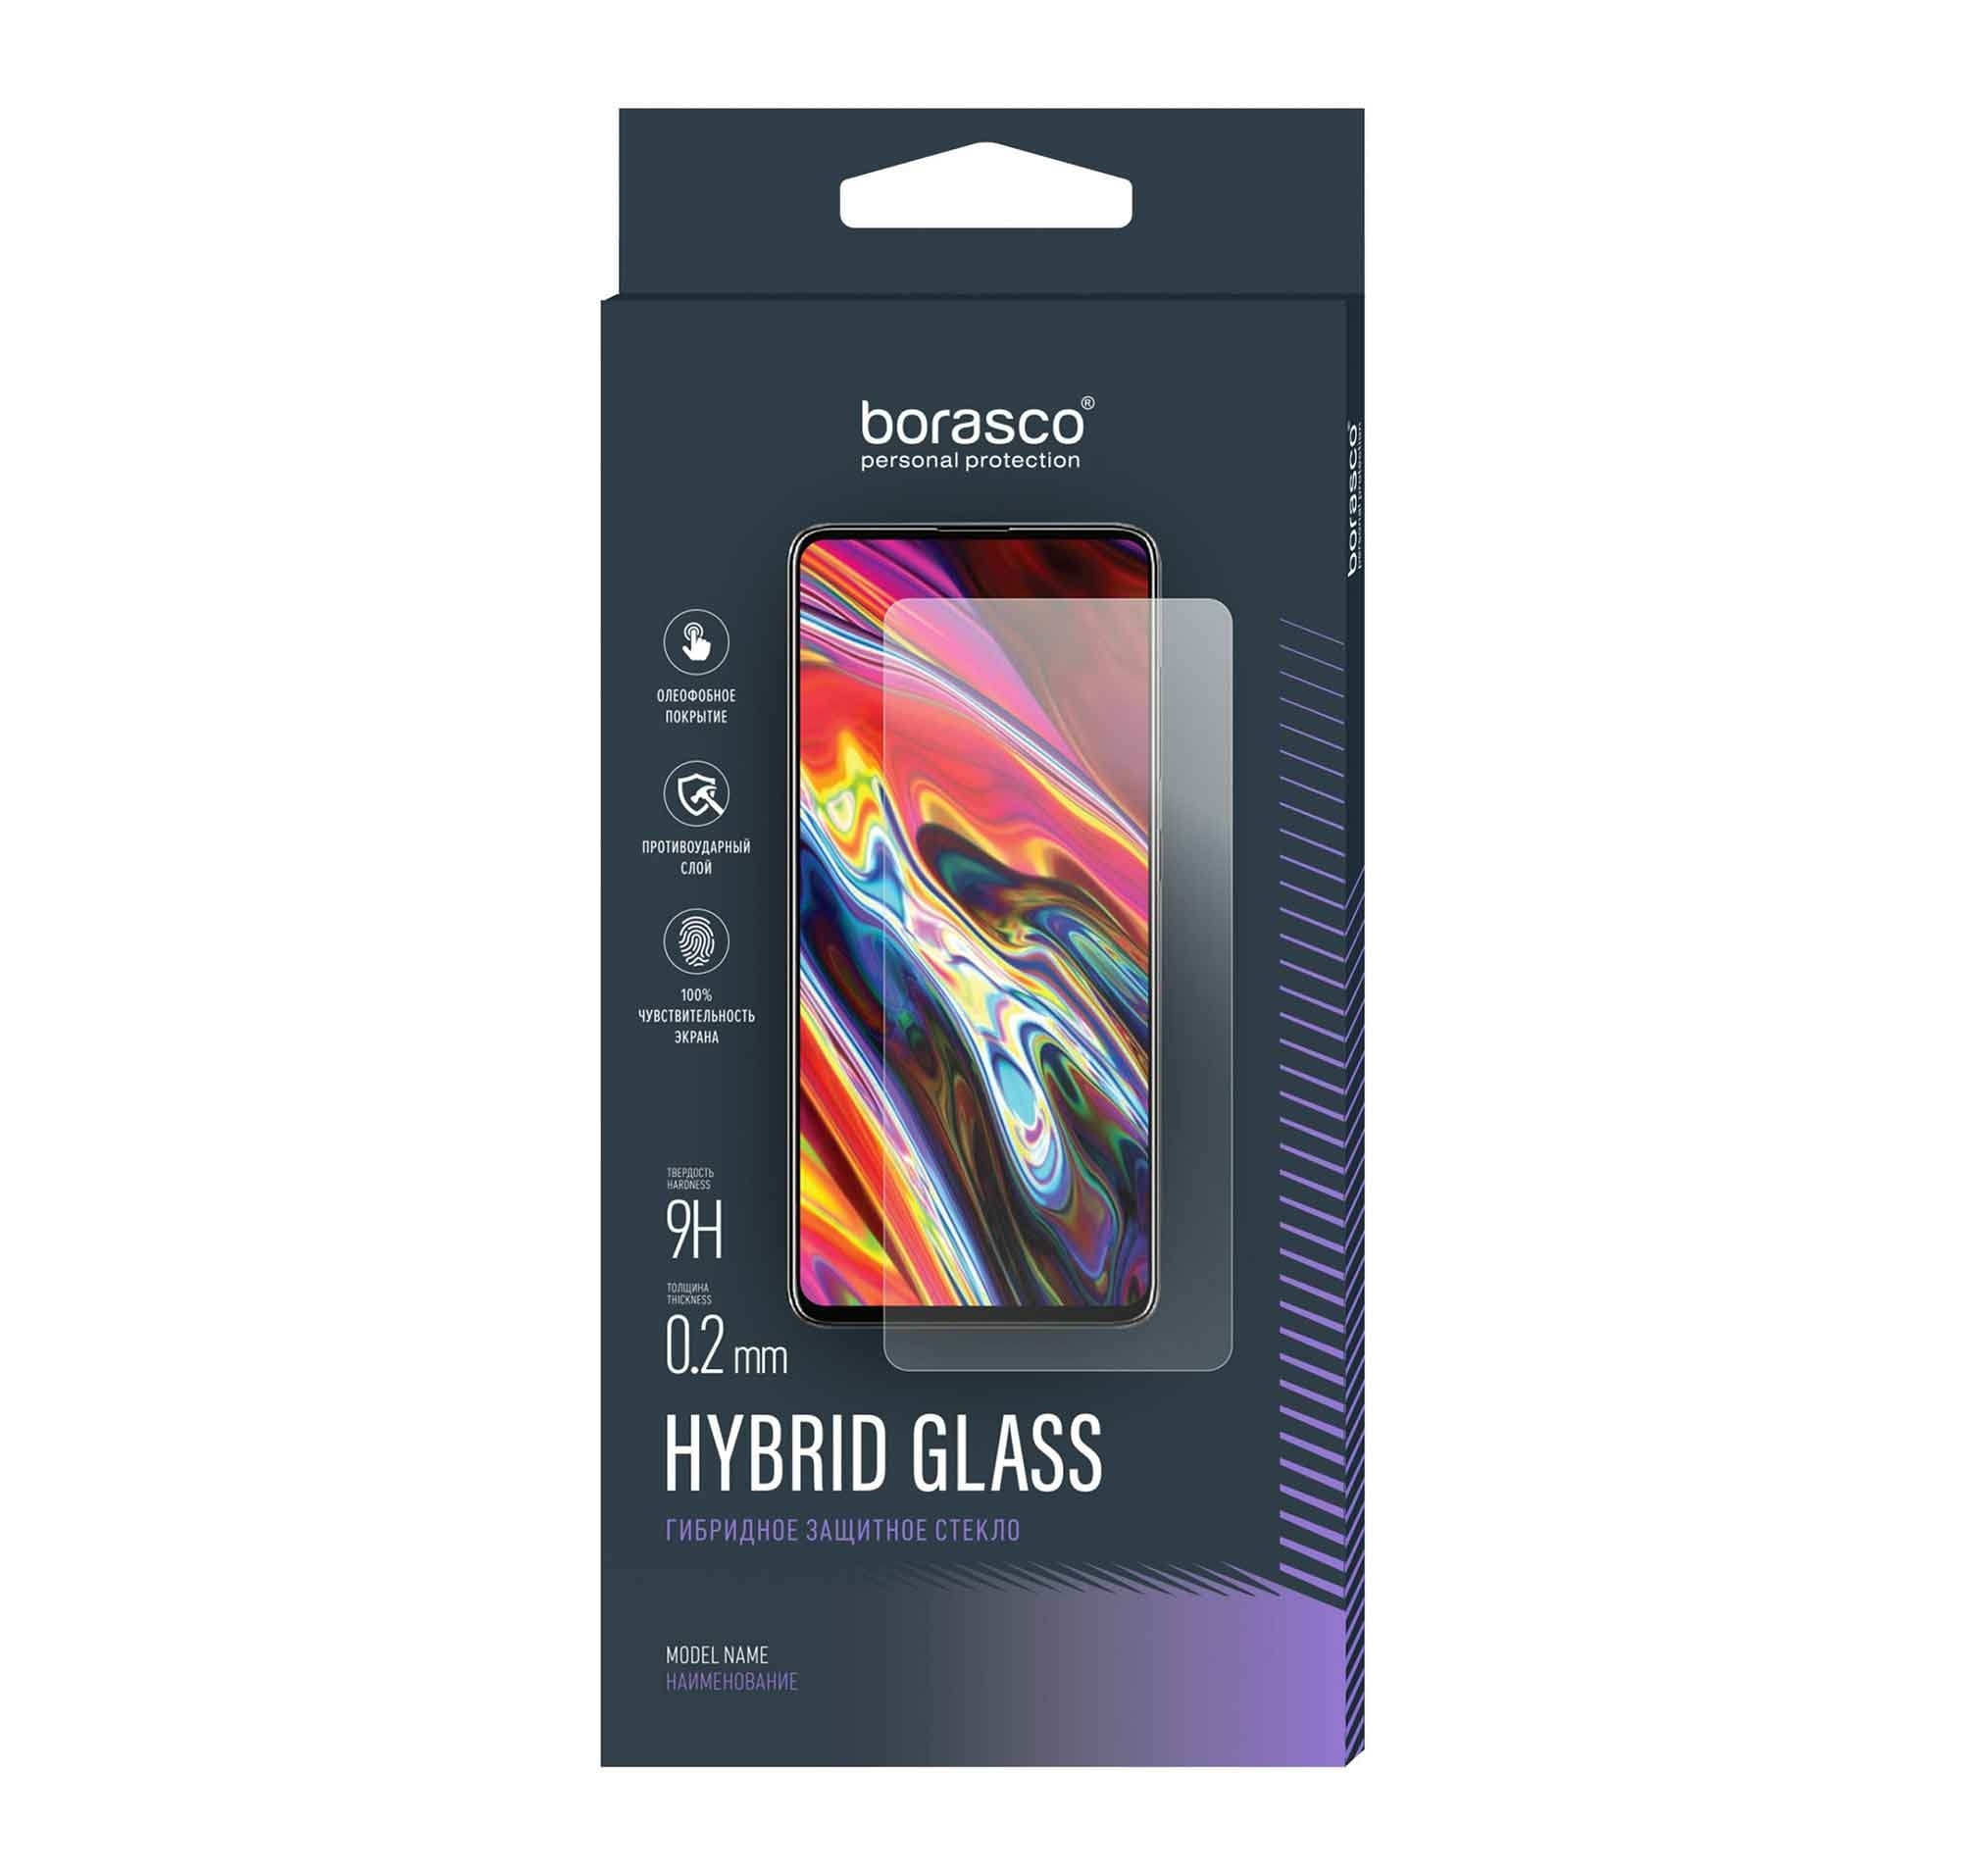 Защитное стекло BoraSCO Hybrid Glass для ITEL Vision 3 глянец защитное стекло luxcase для itel vision 1 0 2mm transparent 82675